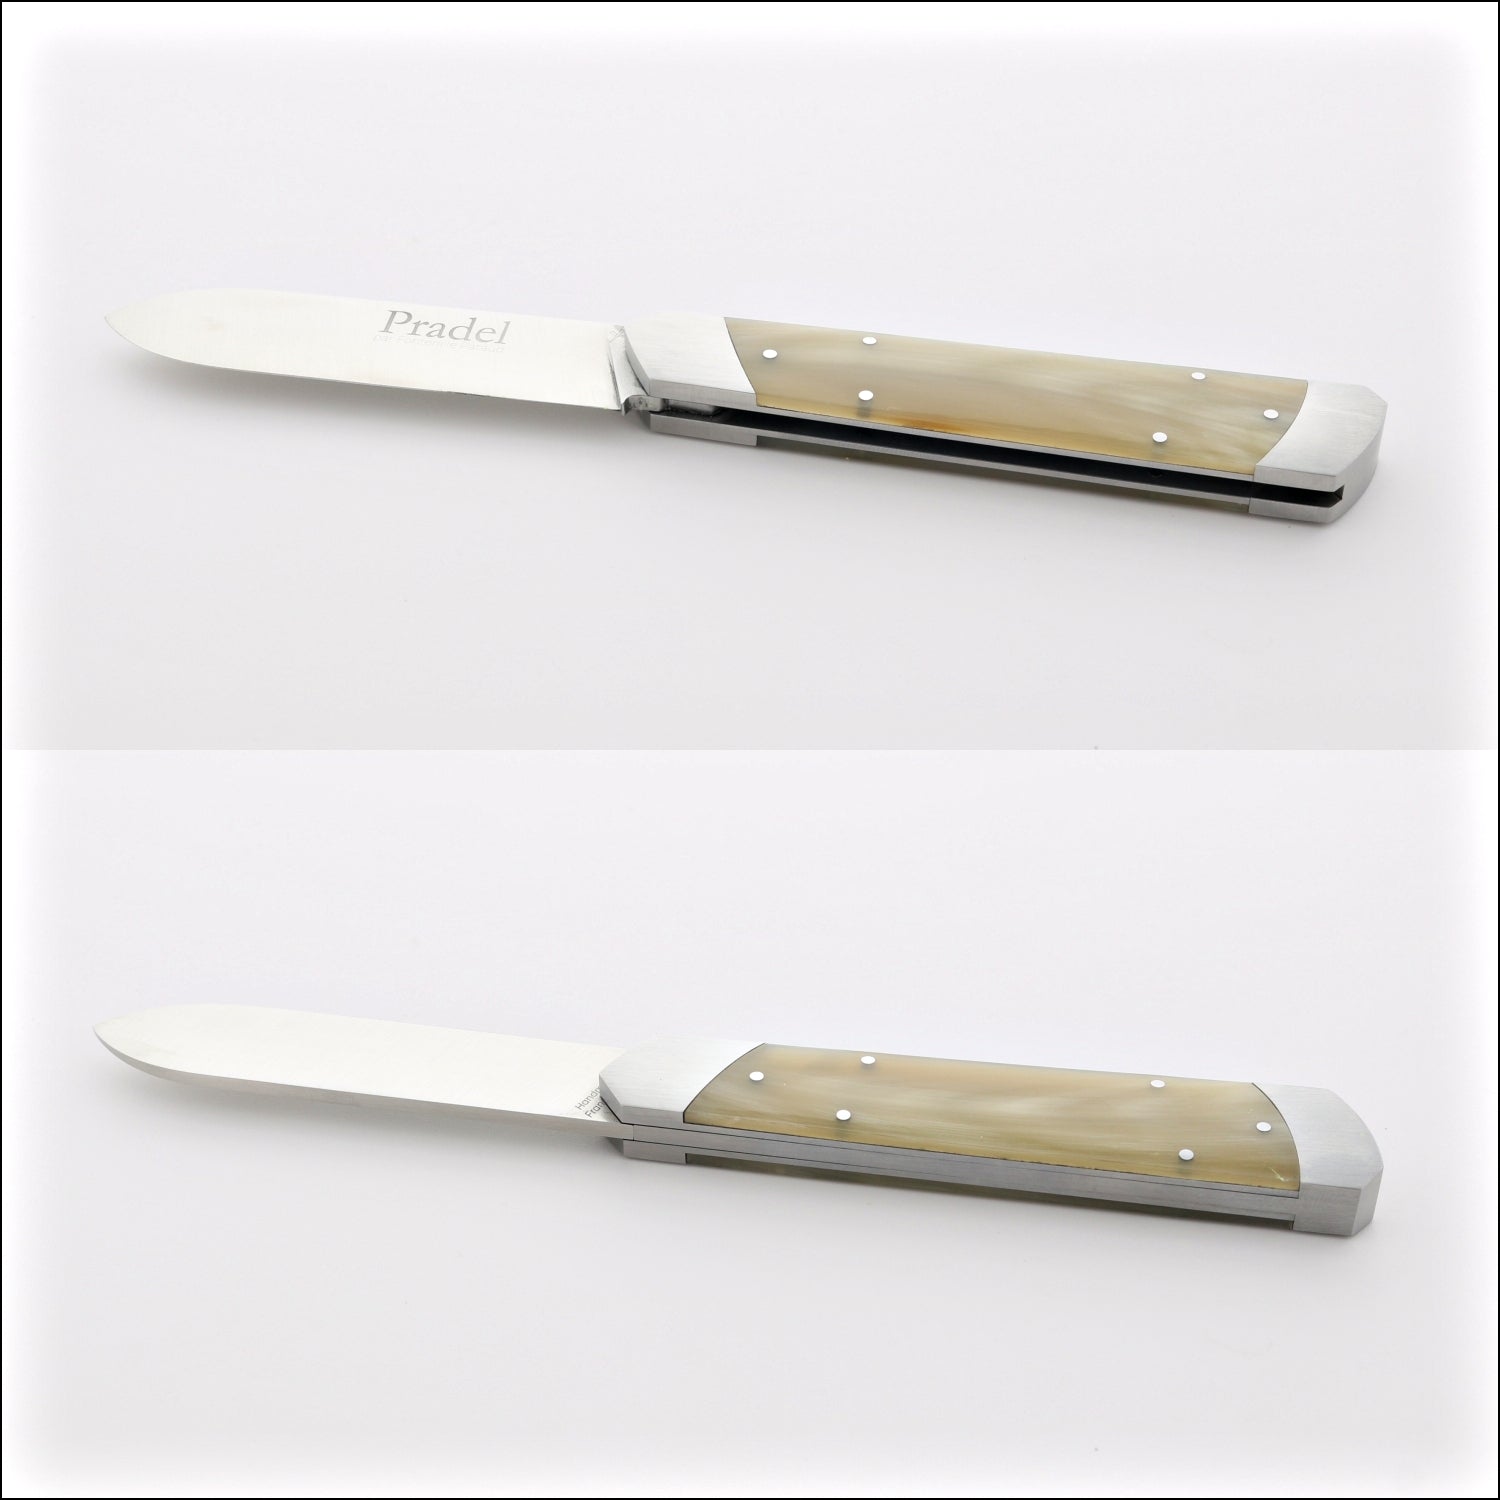 Pradel Folding Knife Light Horn Tip Handle & Lock-Back by Fontenille Pataud